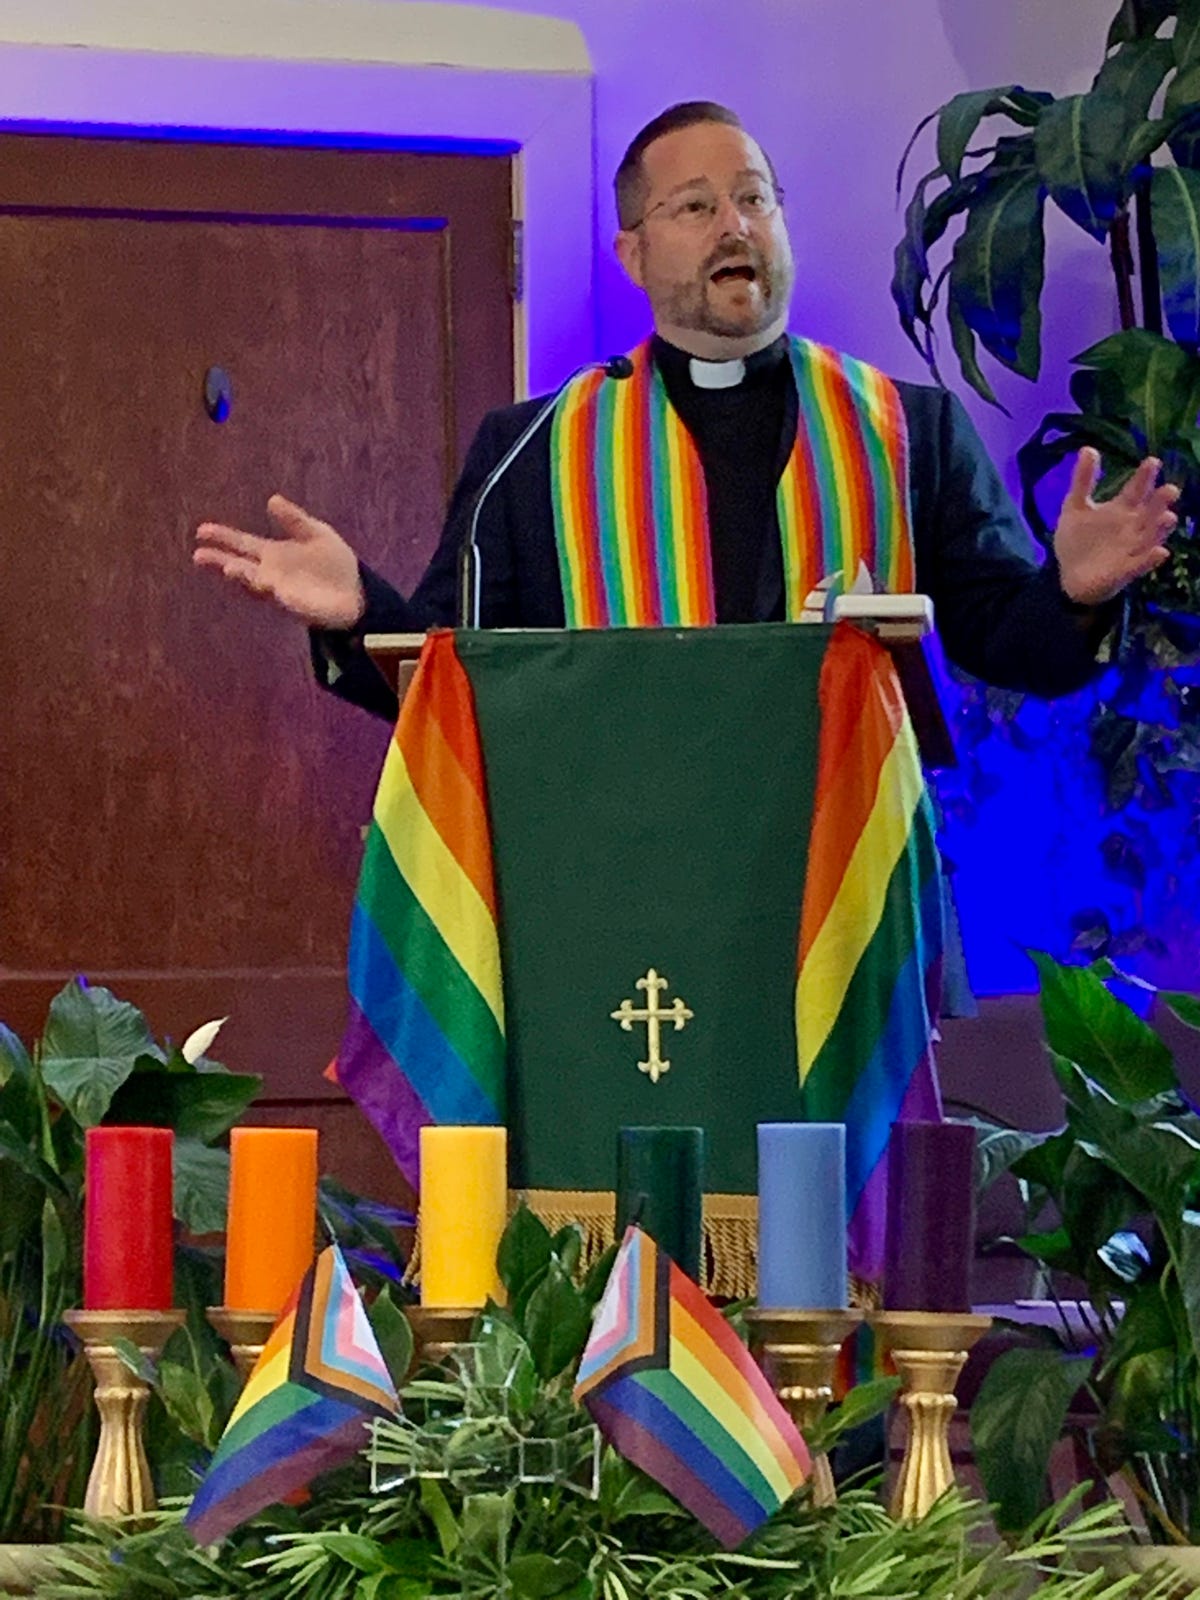 Godsey bishop gregory Pride community